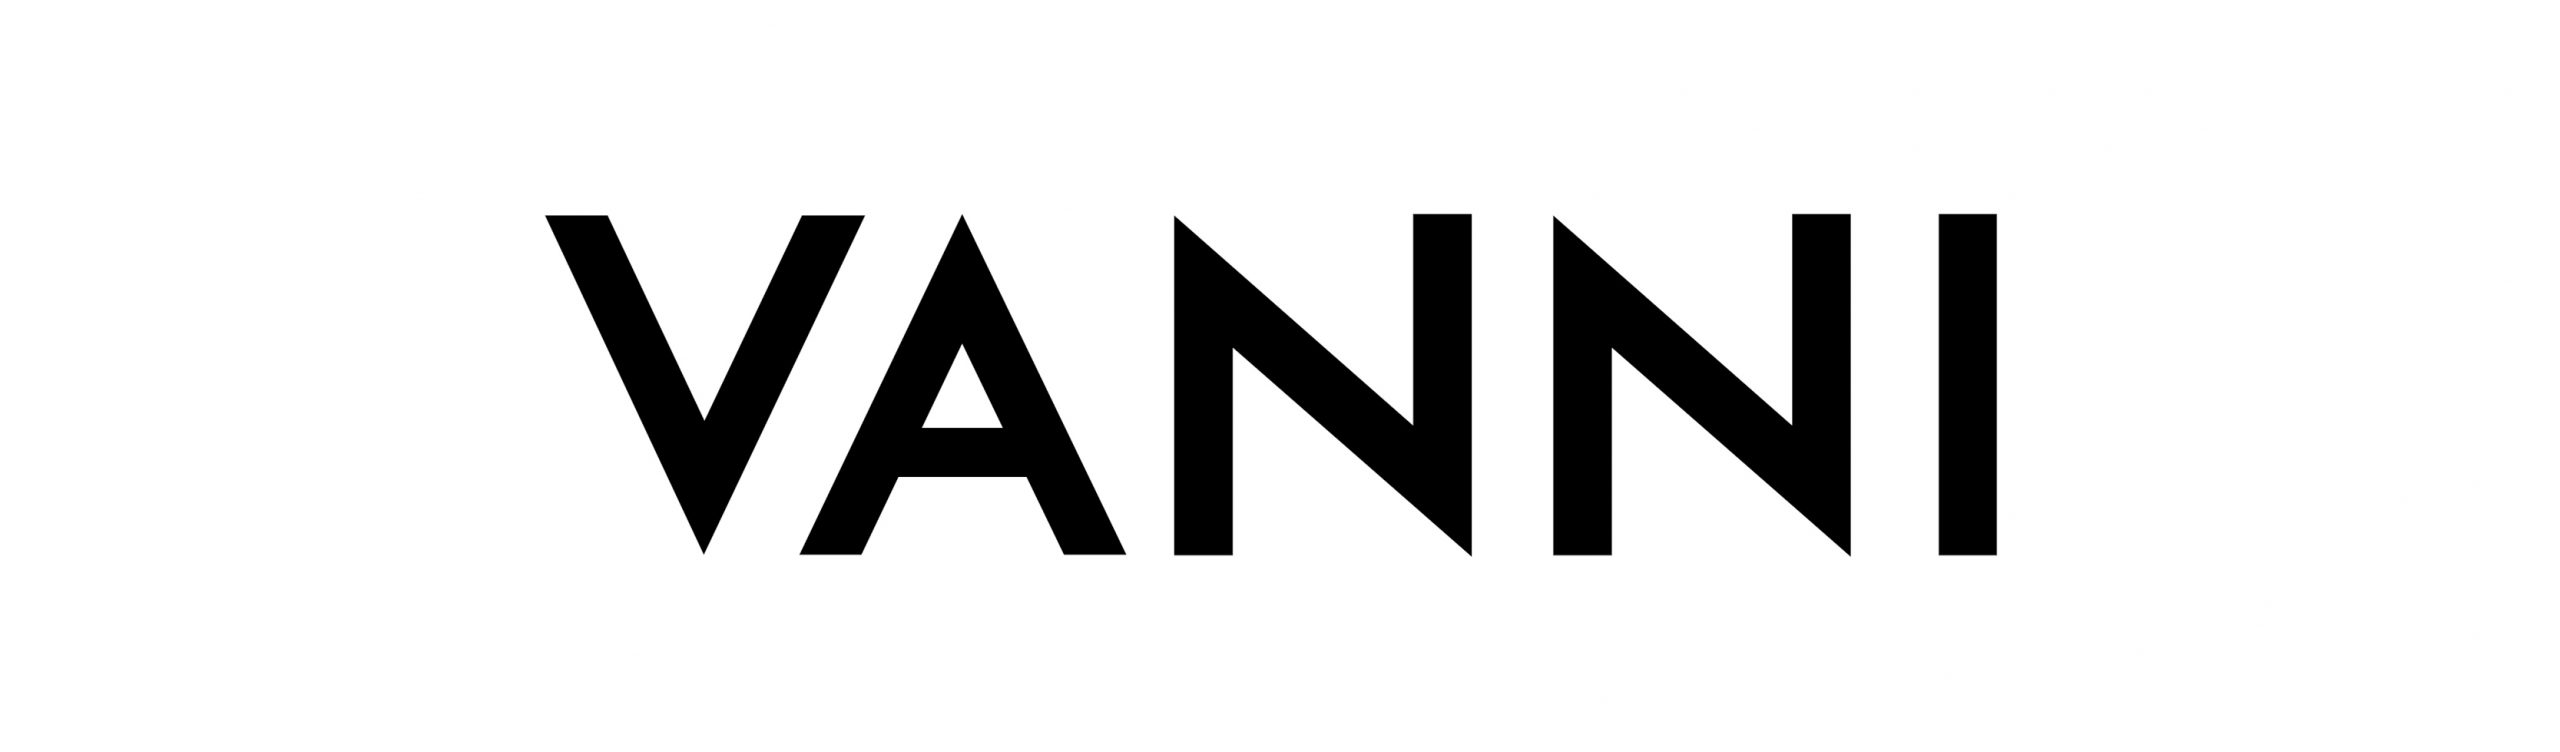 Vanni Eyewear Brand By G&M Eyecare